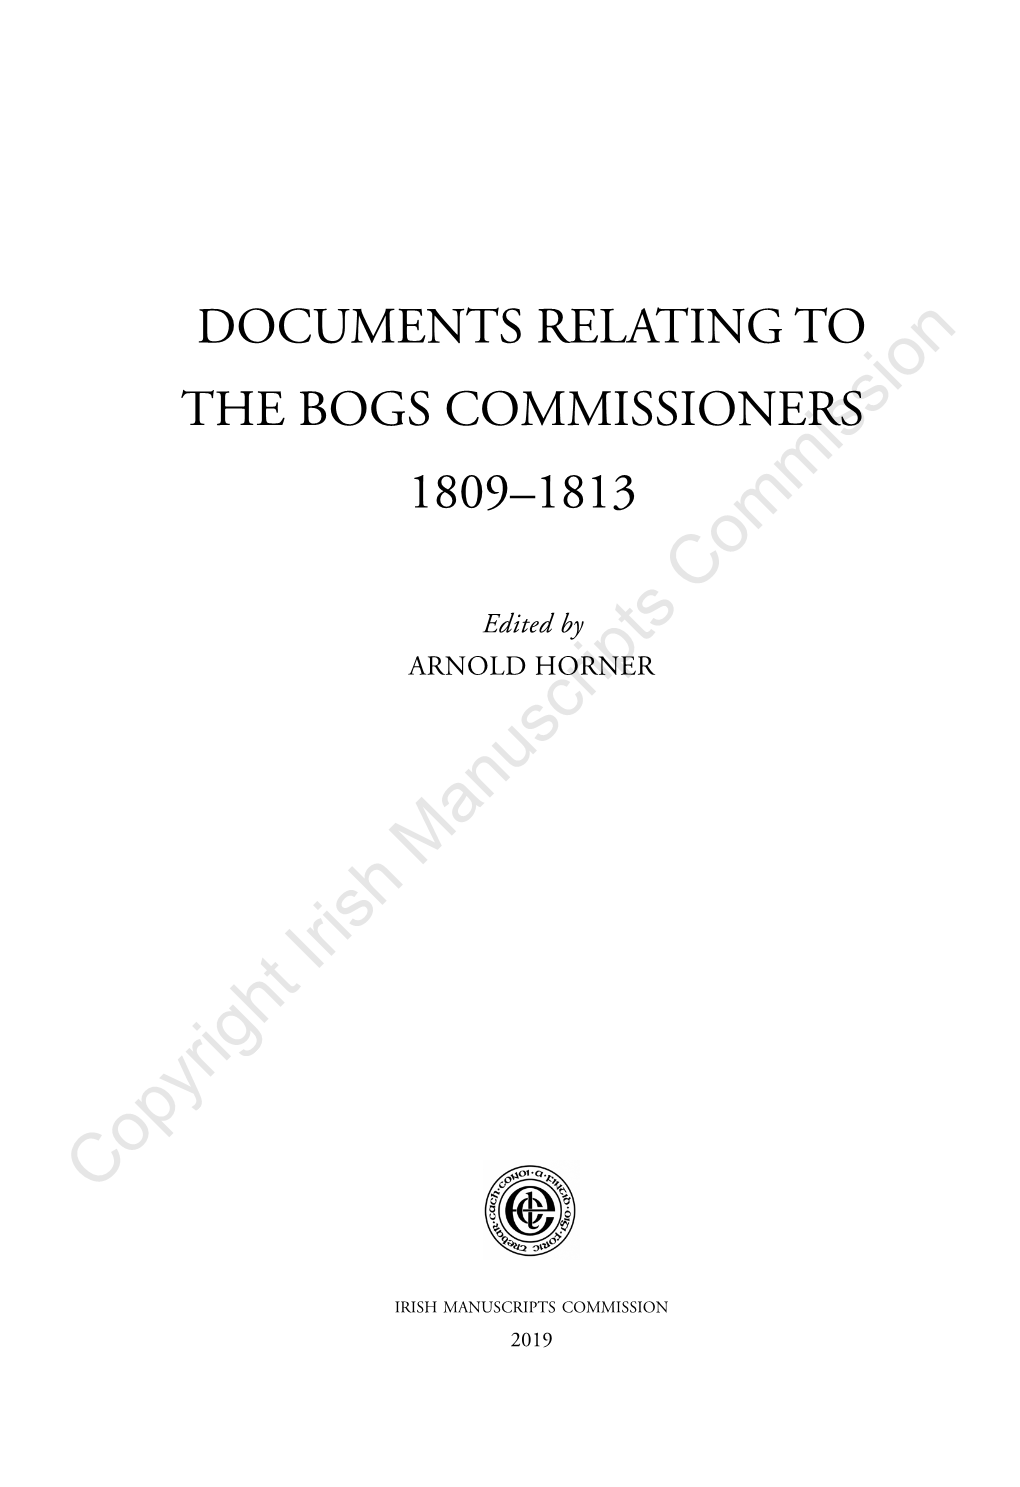 Copyright Irish Manuscripts Commission